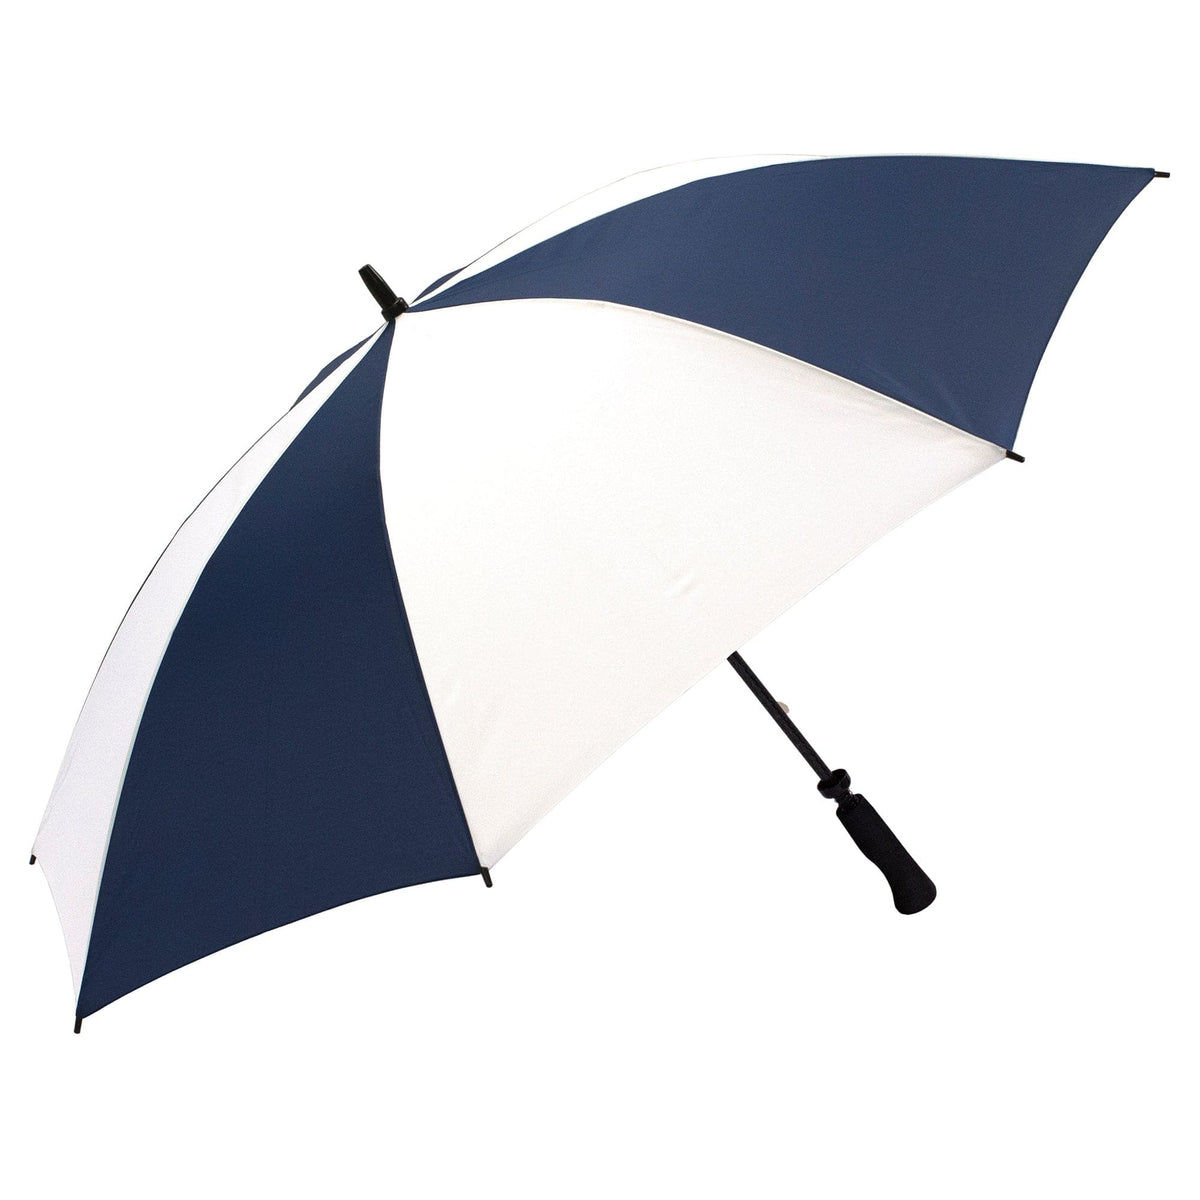 Haas-Jordan Olympia Umbrella